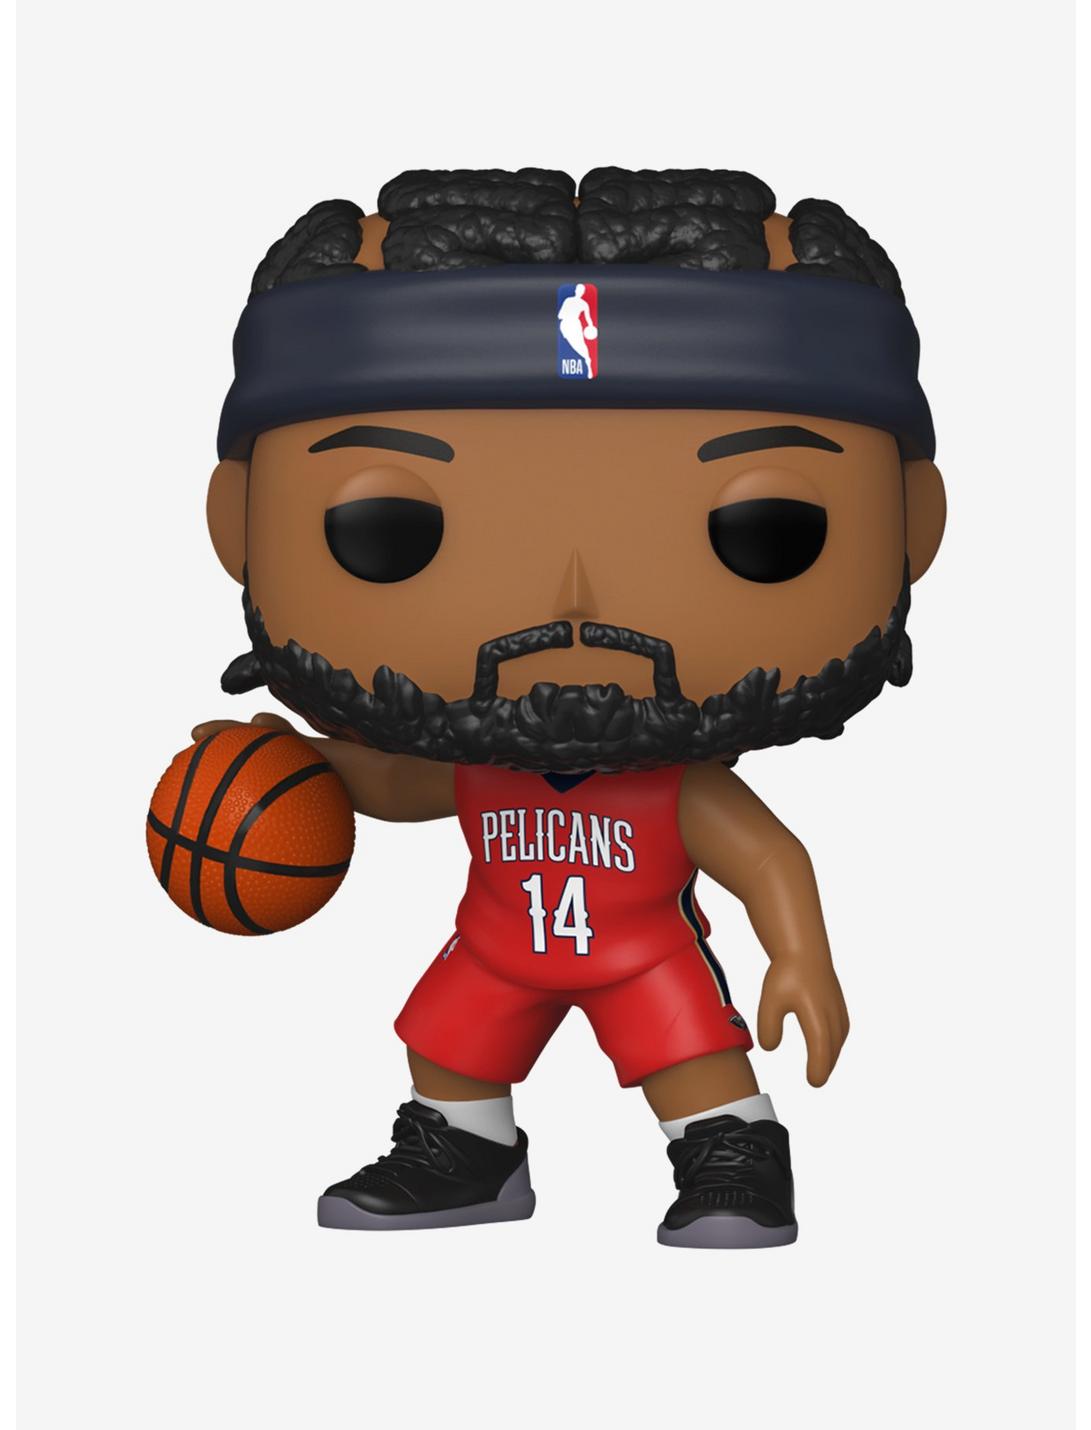 Funko Pop! Basketball NBA New Orleans Pelicans Brandon Ingram Vinyl Figure, , hi-res